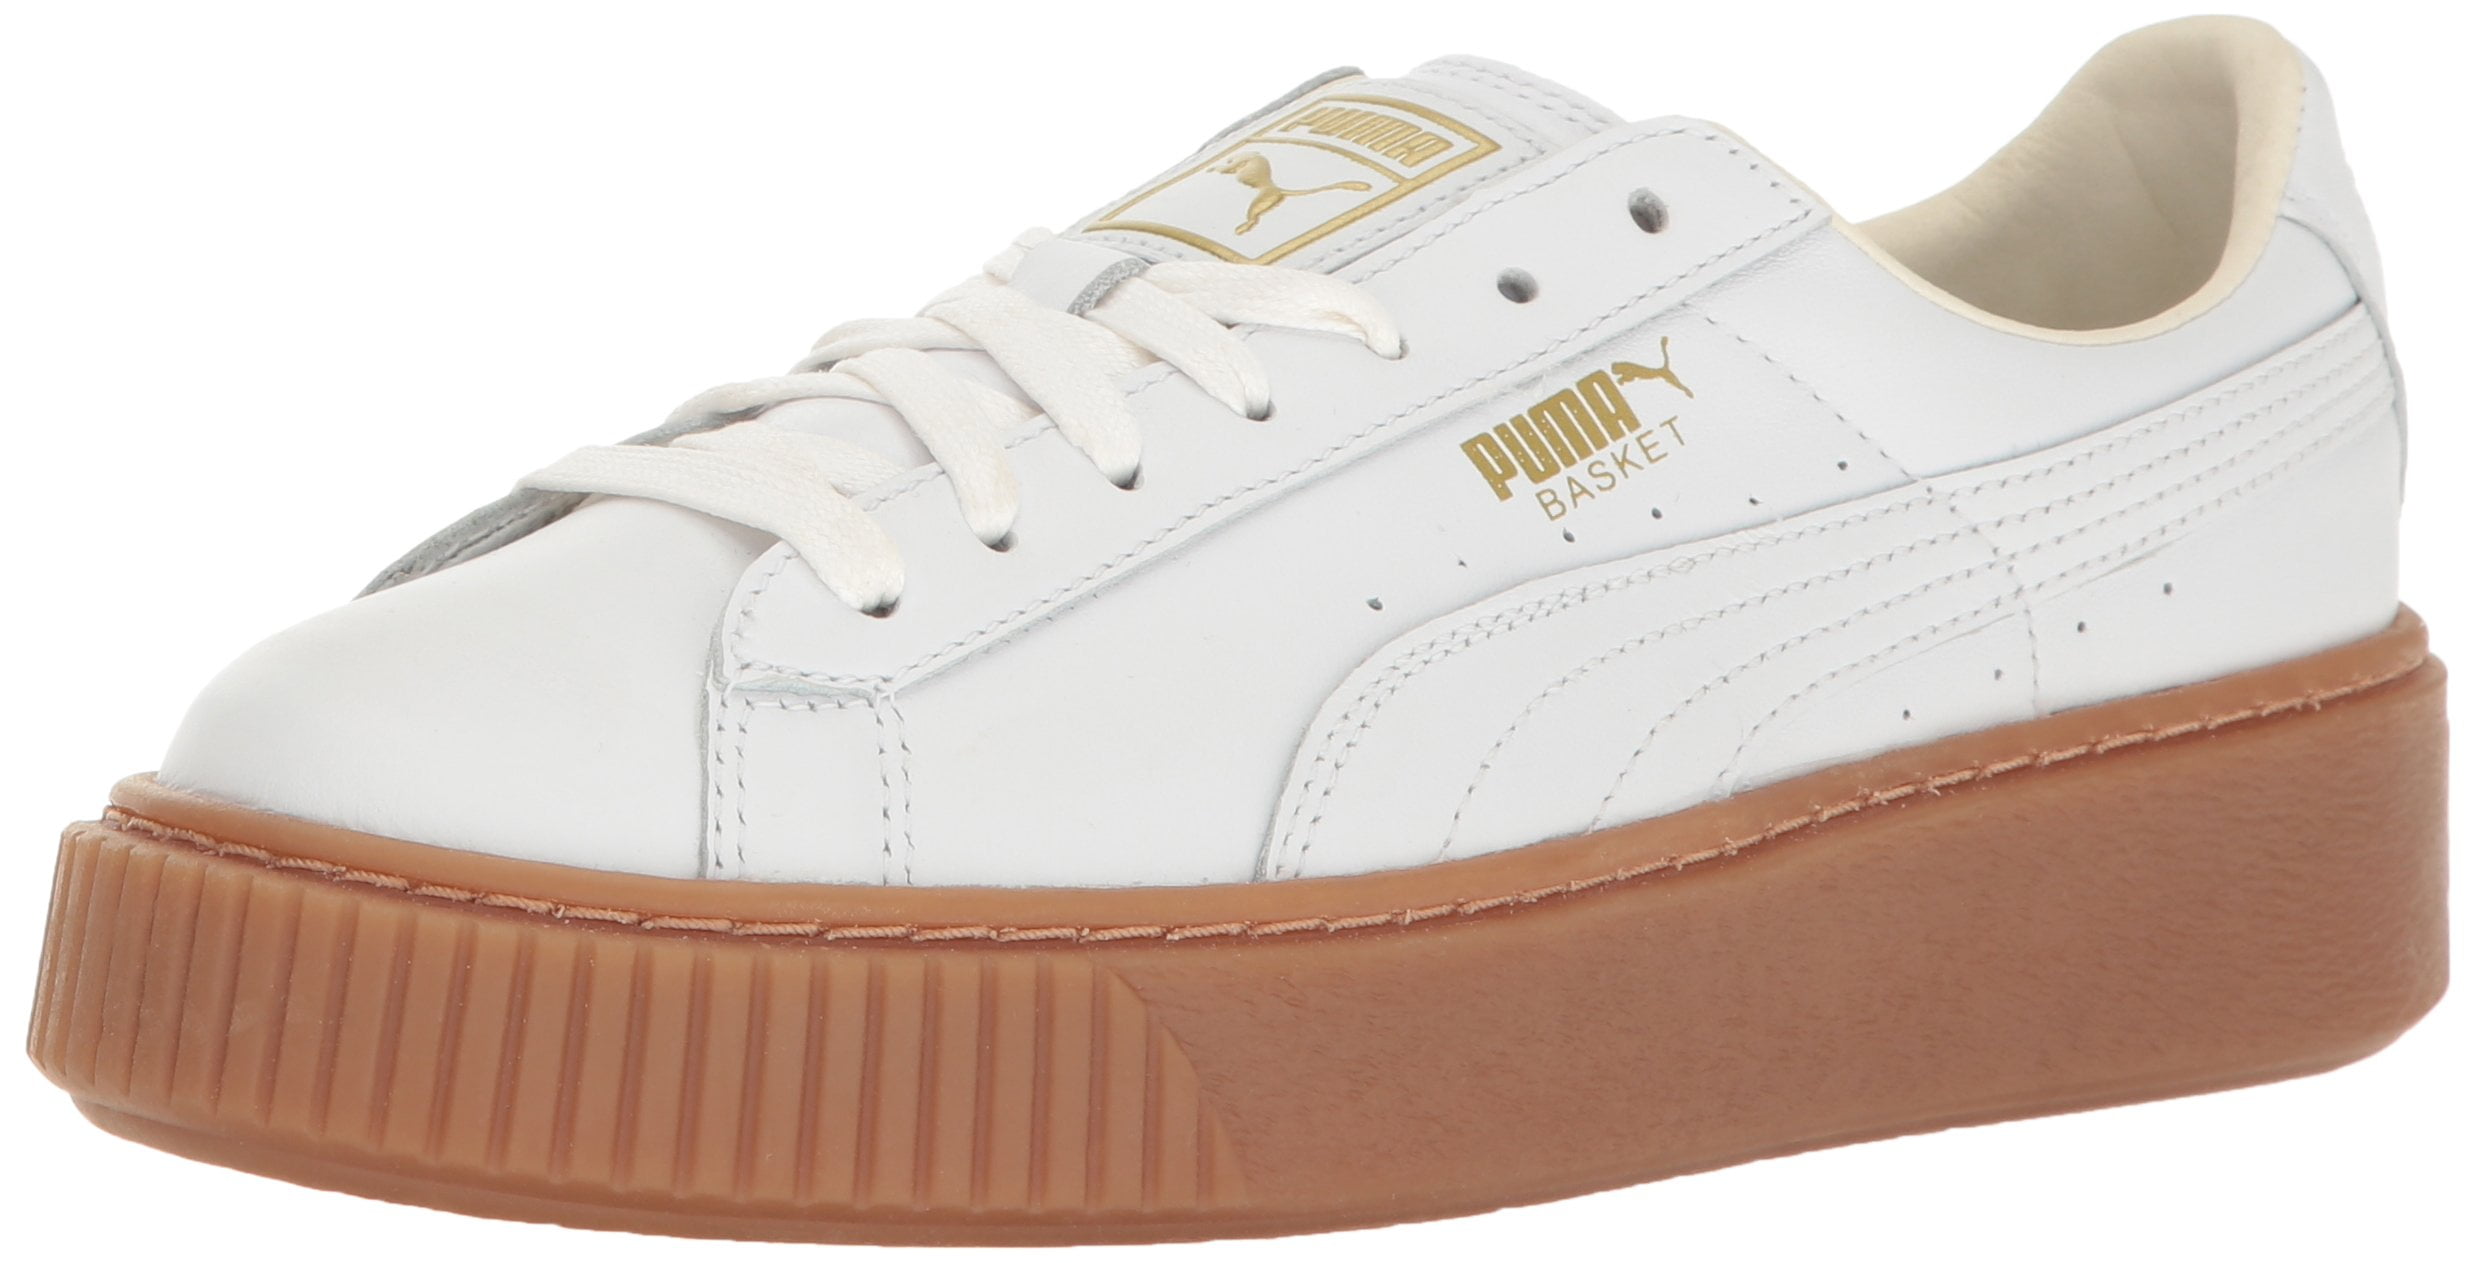 puma white sneakers platform